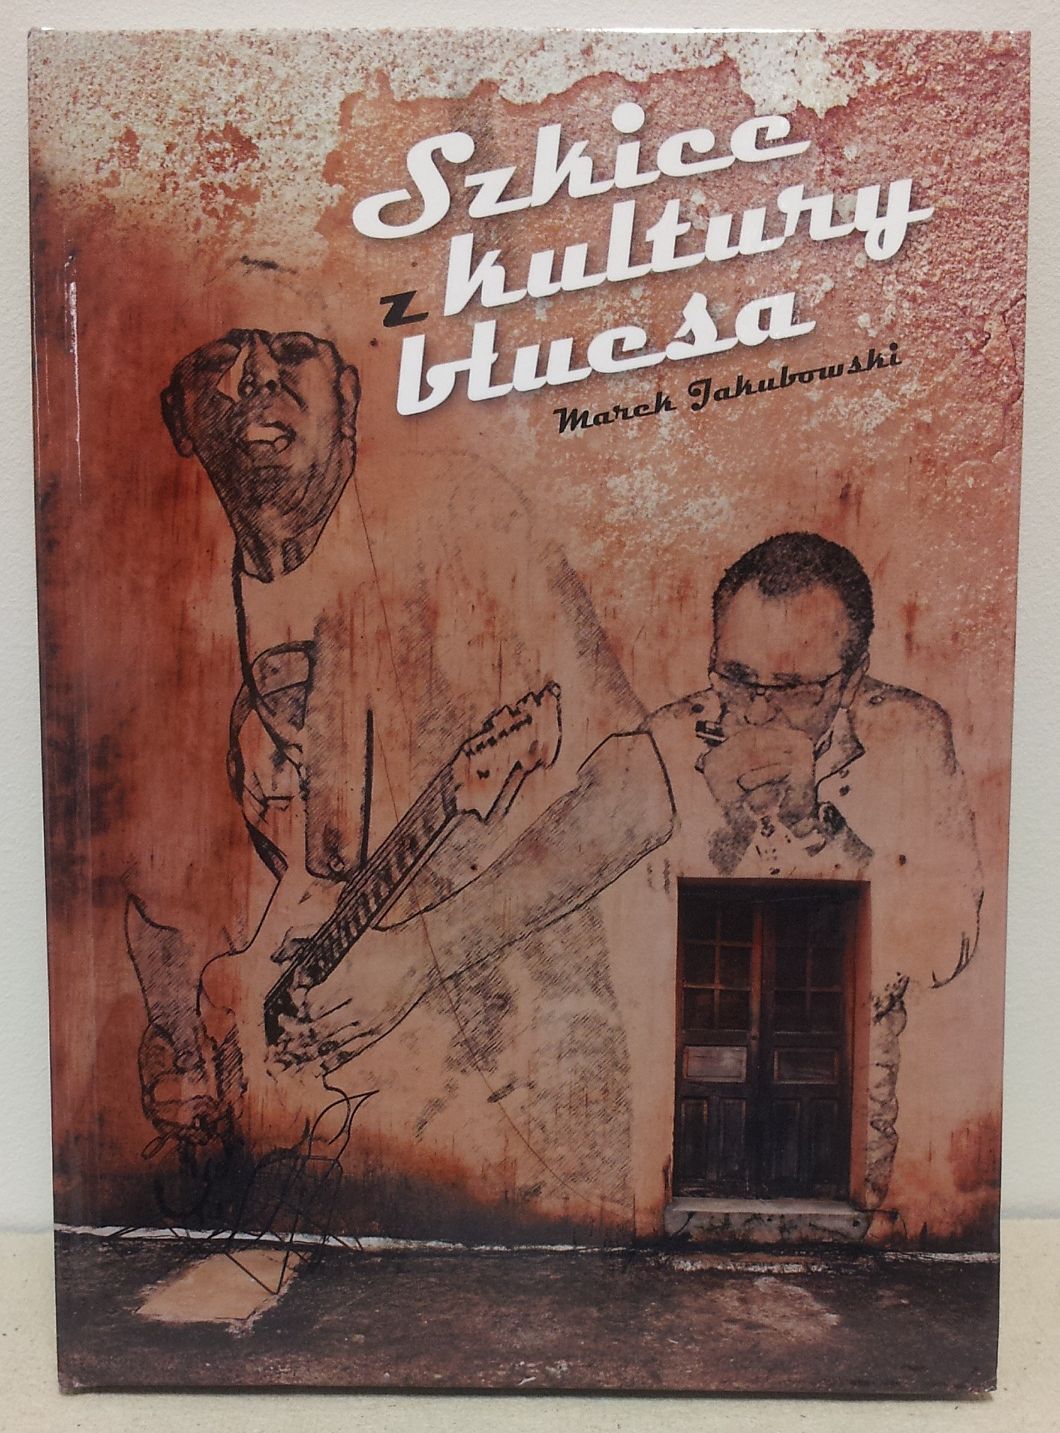 Marek Jakubowski: Szkice z kultury bluesa